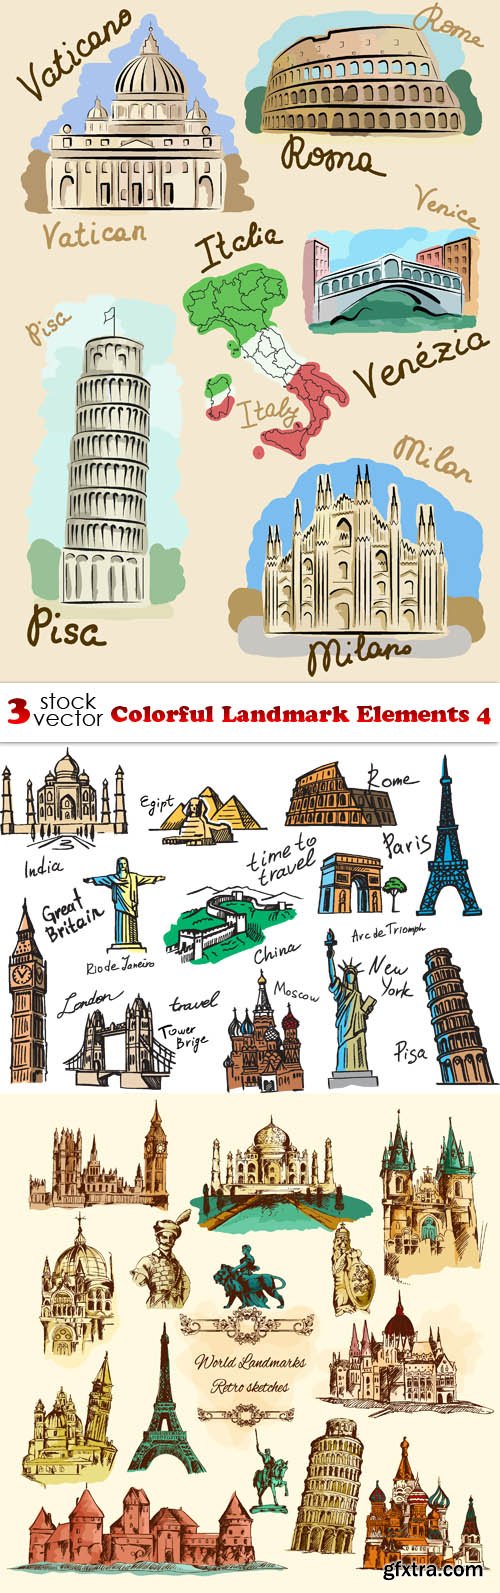 Vectors - Colorful Landmark Elements 4